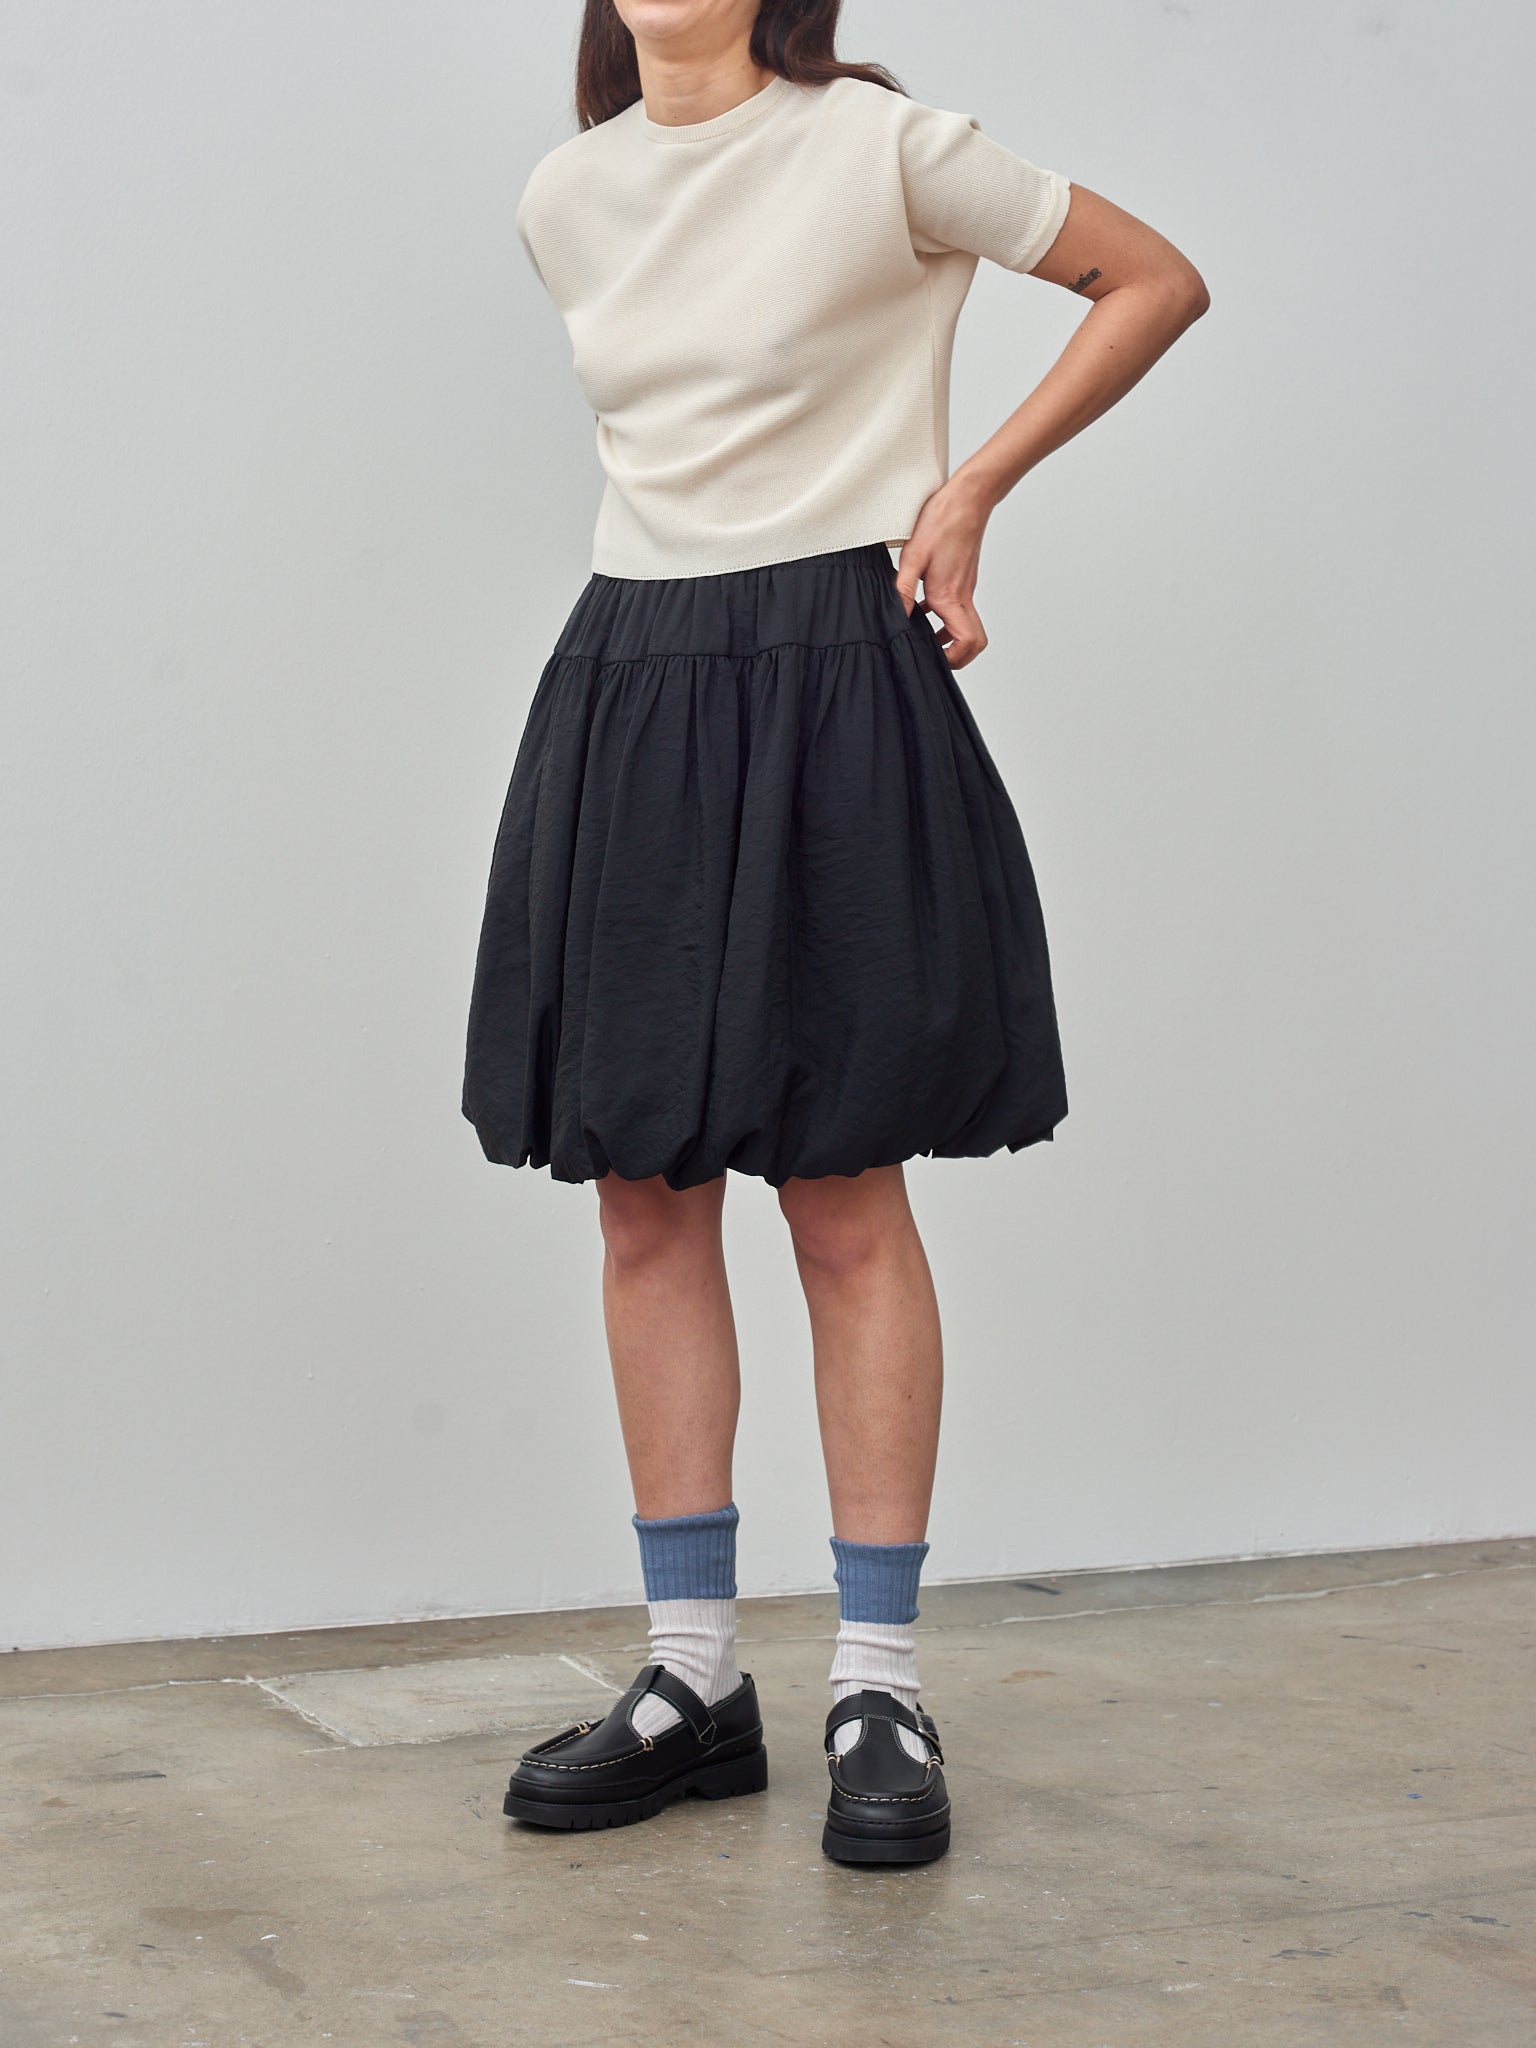 Namu Shop - Sara Lanzi Knitted Light Cotton T-Shirt - Milk